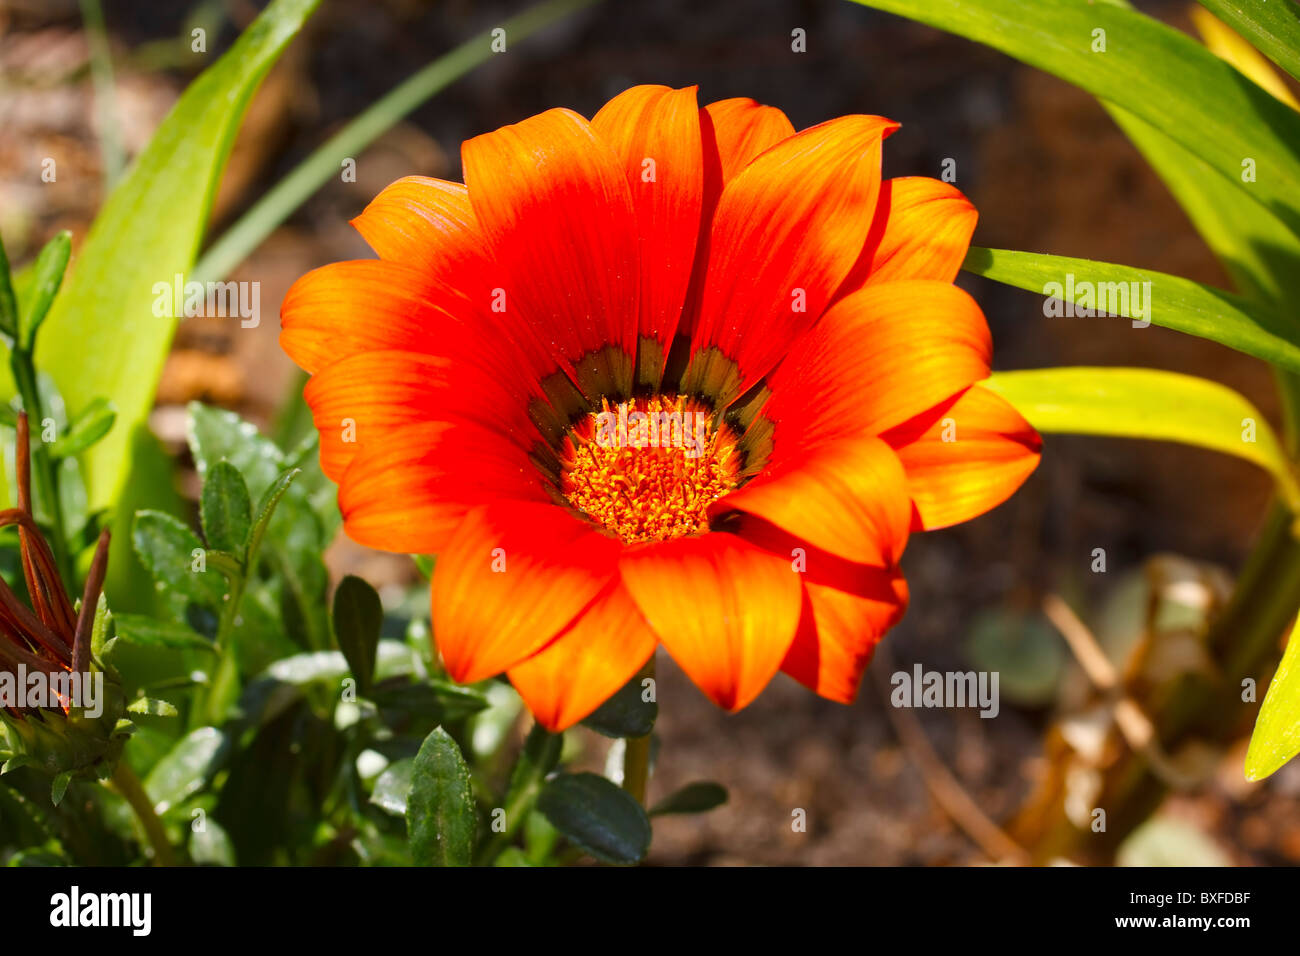 Orange Gazania or African daisy. Family: Asteraceae, Genus: Gazania. South Africa. Stock Photo